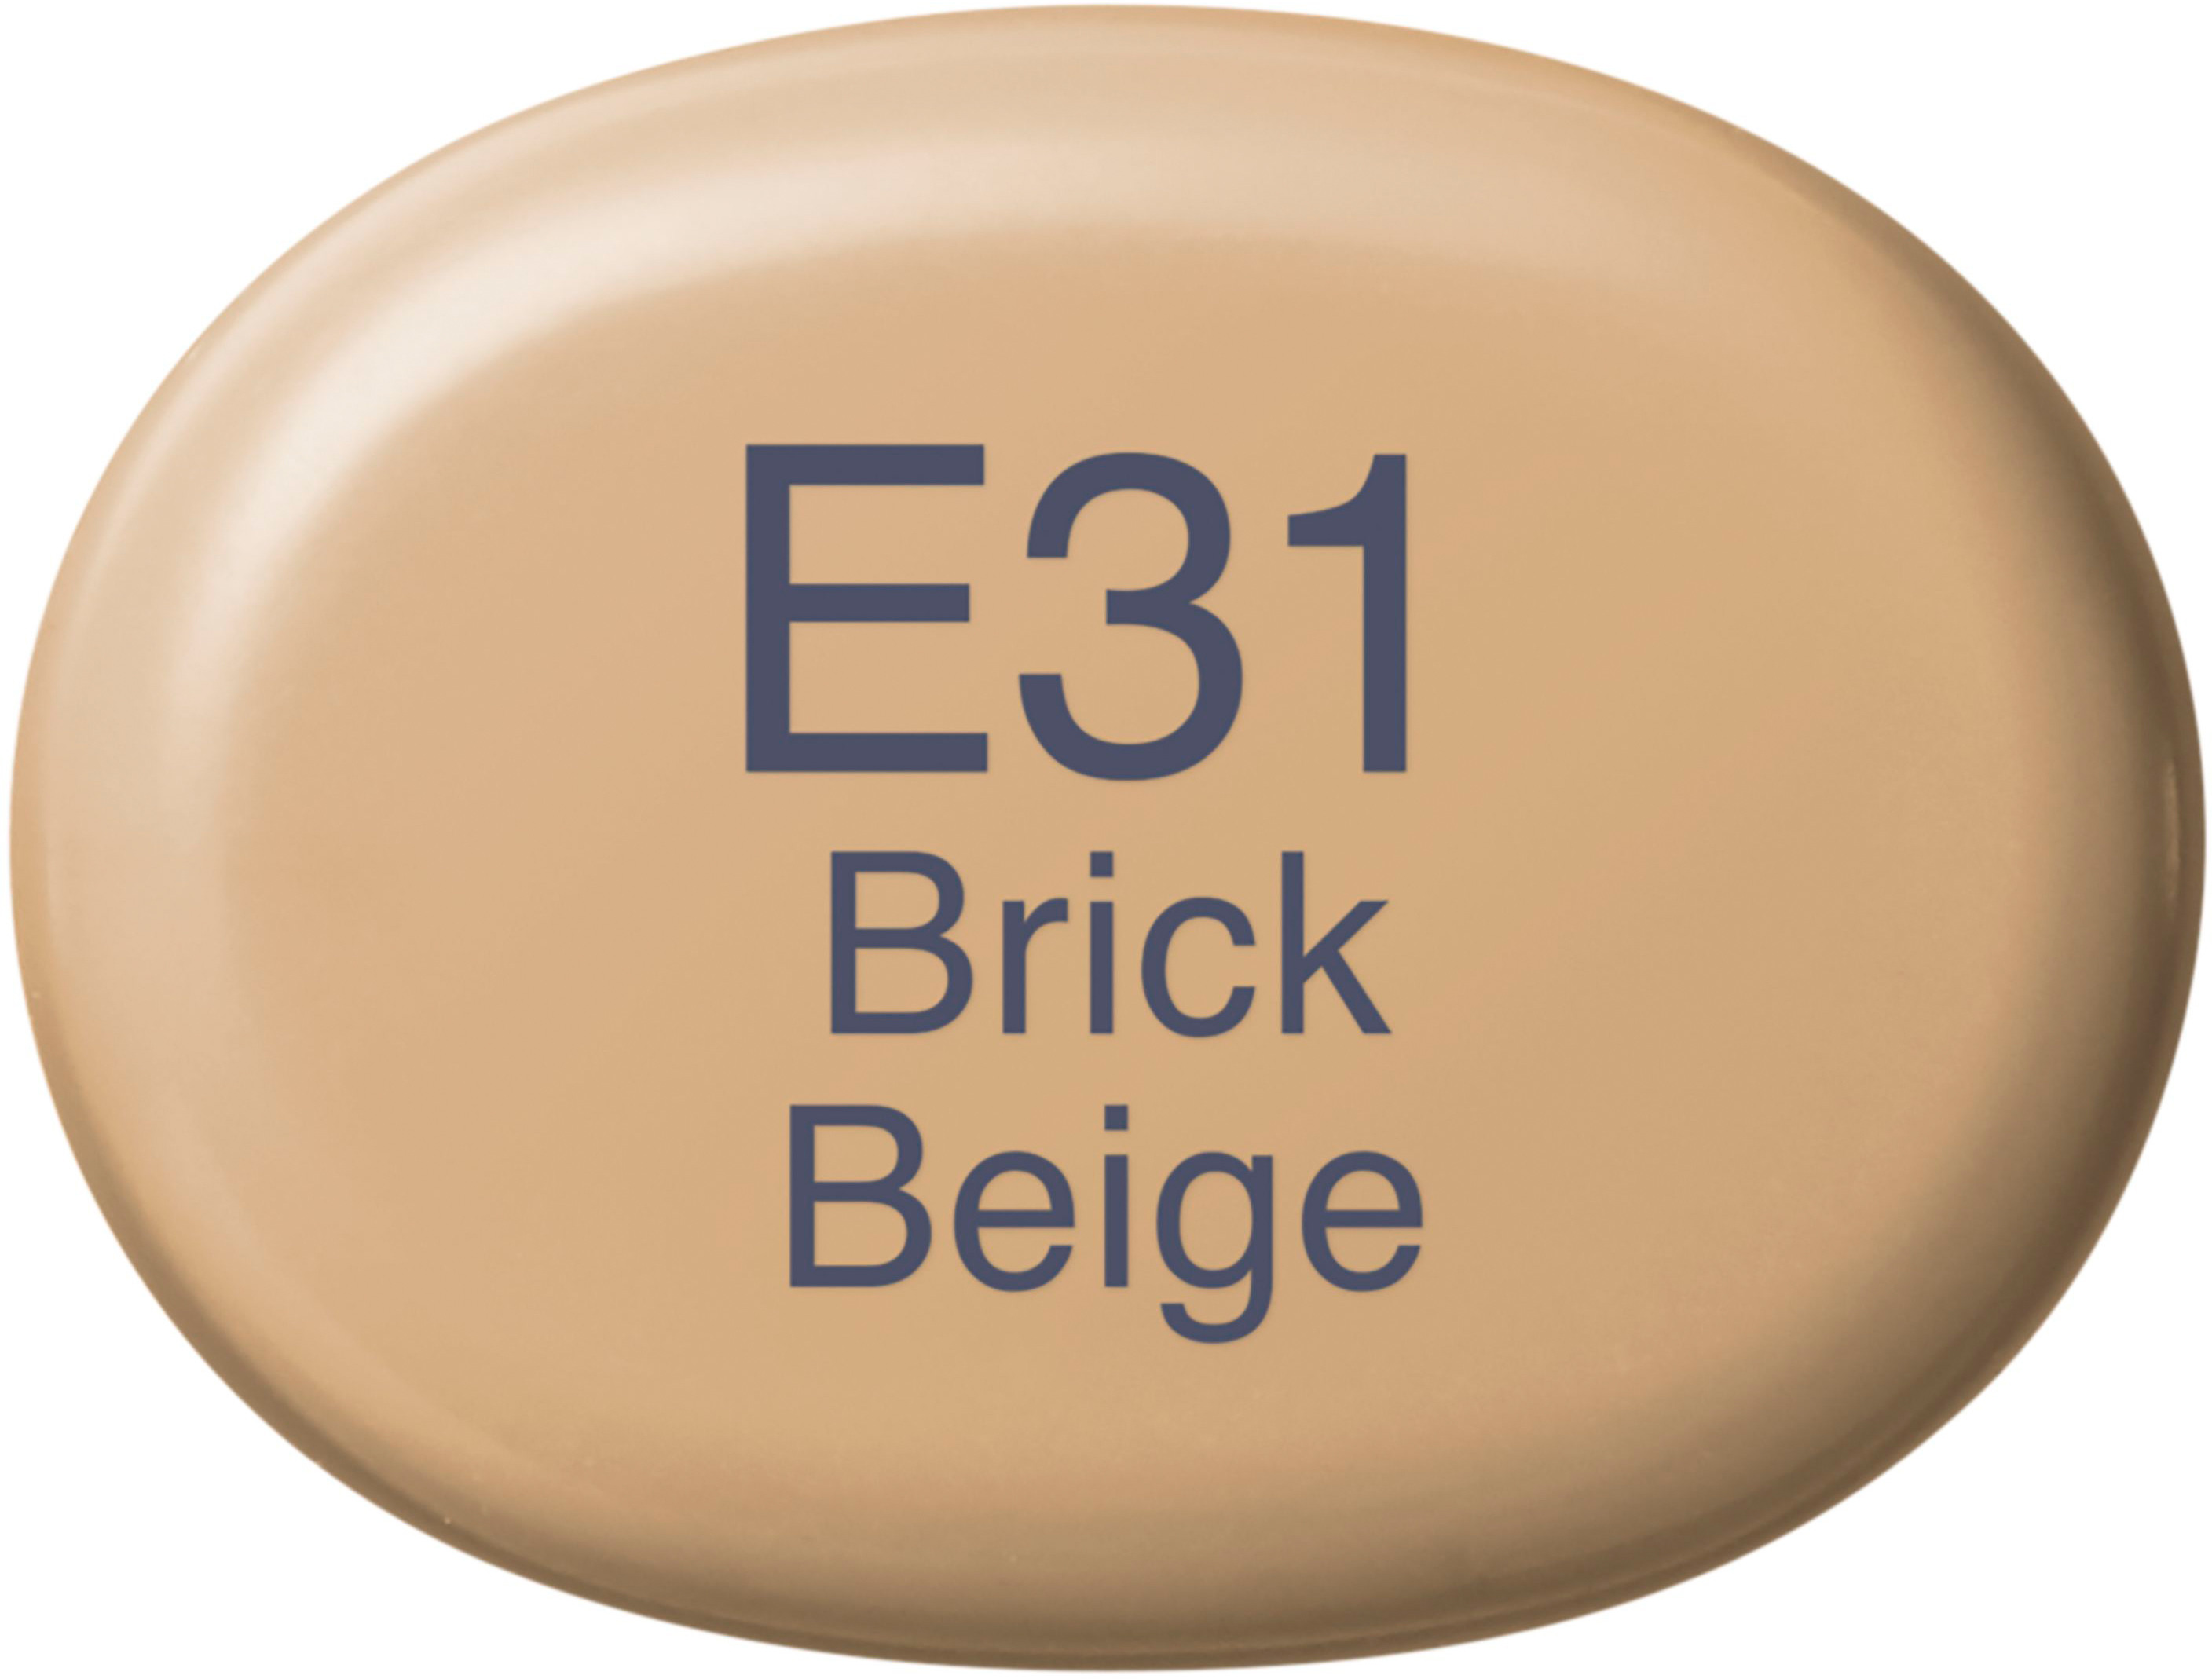 COPIC Marker Sketch 21075123 E31 - Brick Beige